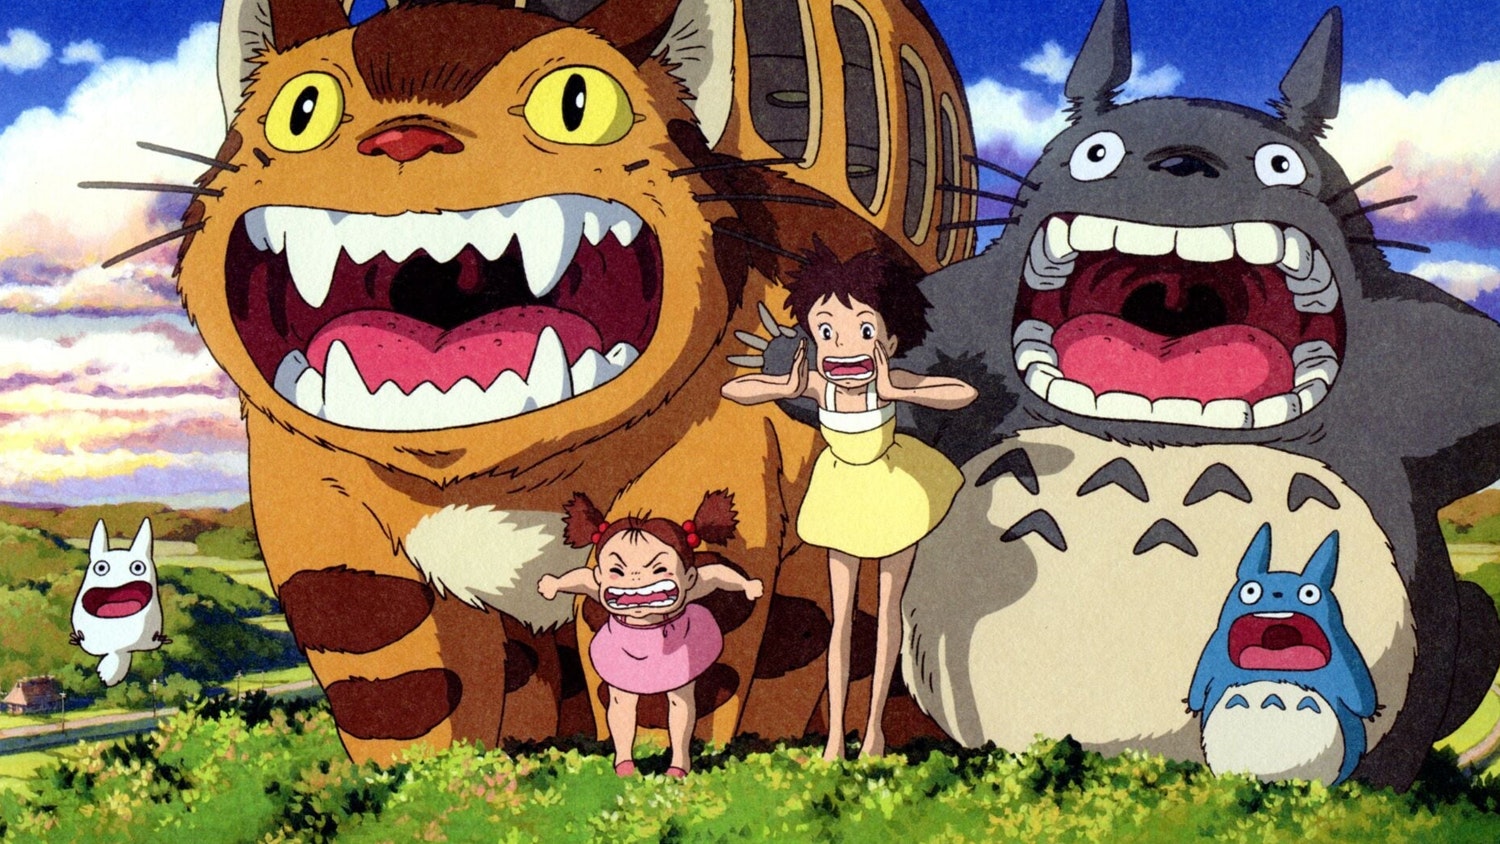 Spirited Away Animated Character Movie Cartoon T-Shirt - Ghibli Merch Store  - Official Studio Ghibli Merchandise